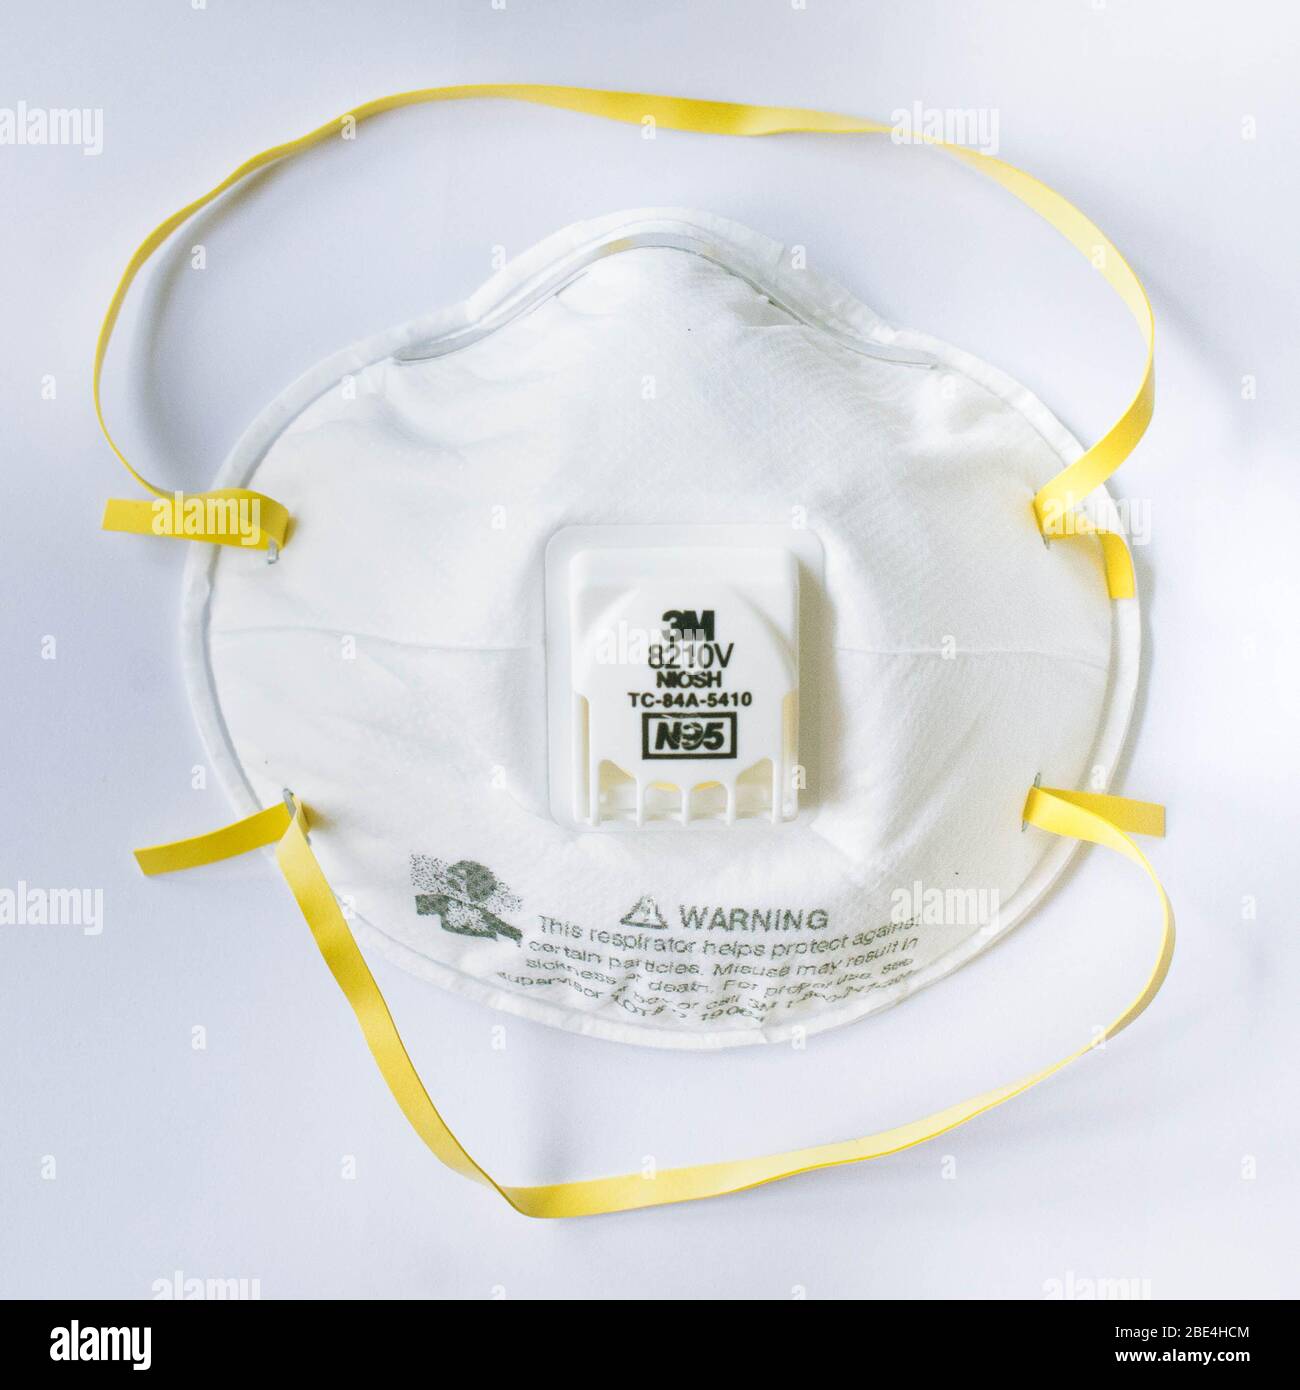 3M 8210 N95 respirator mask for coronavirus control. Isolated on white. Stock Photo